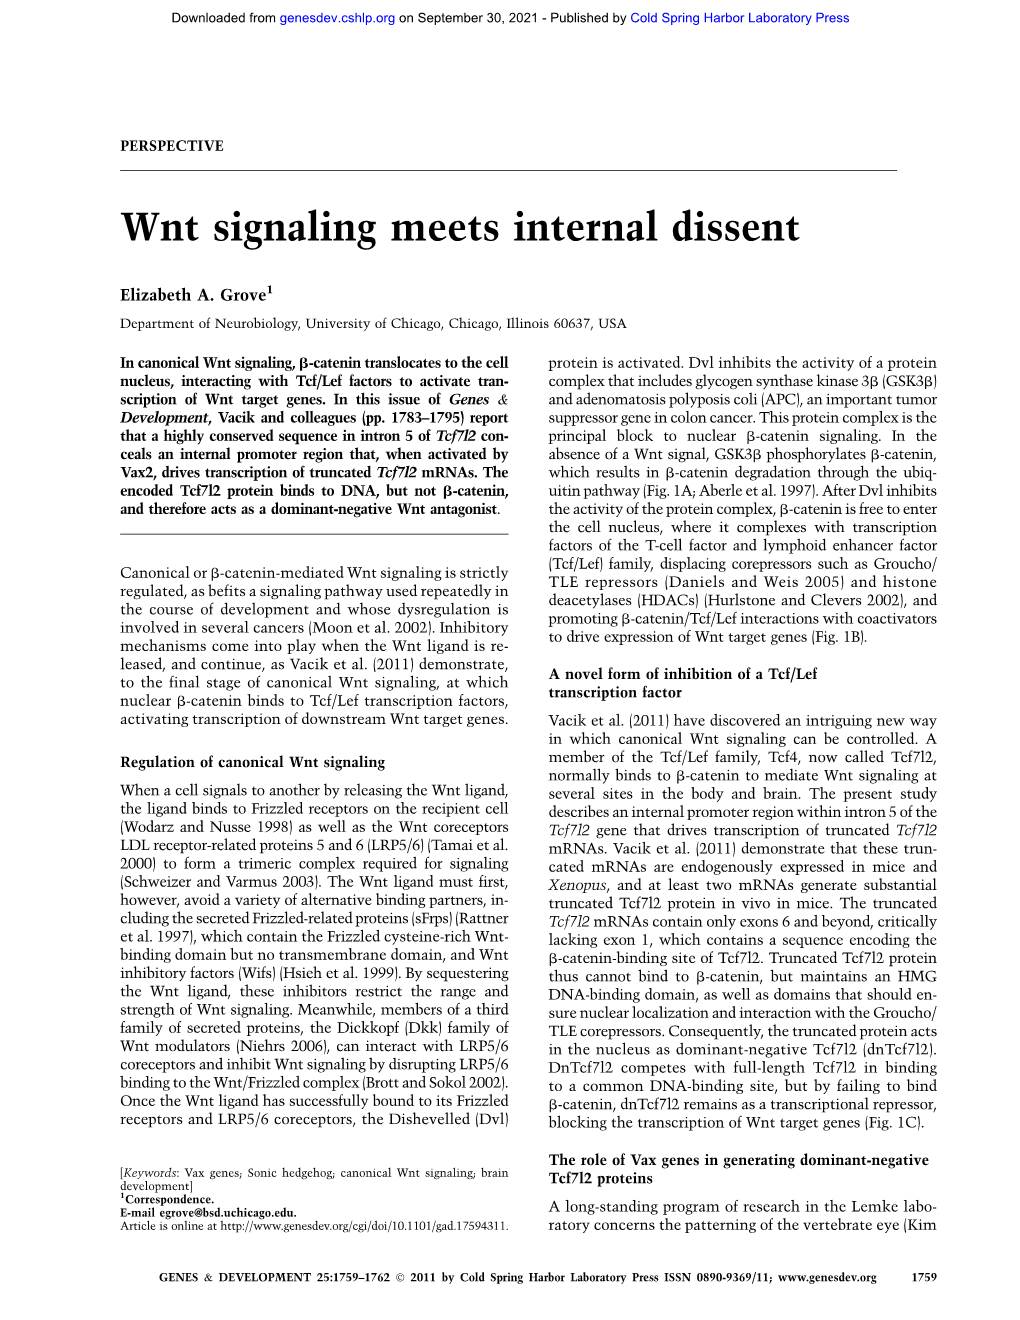 Wnt Signaling Meets Internal Dissent